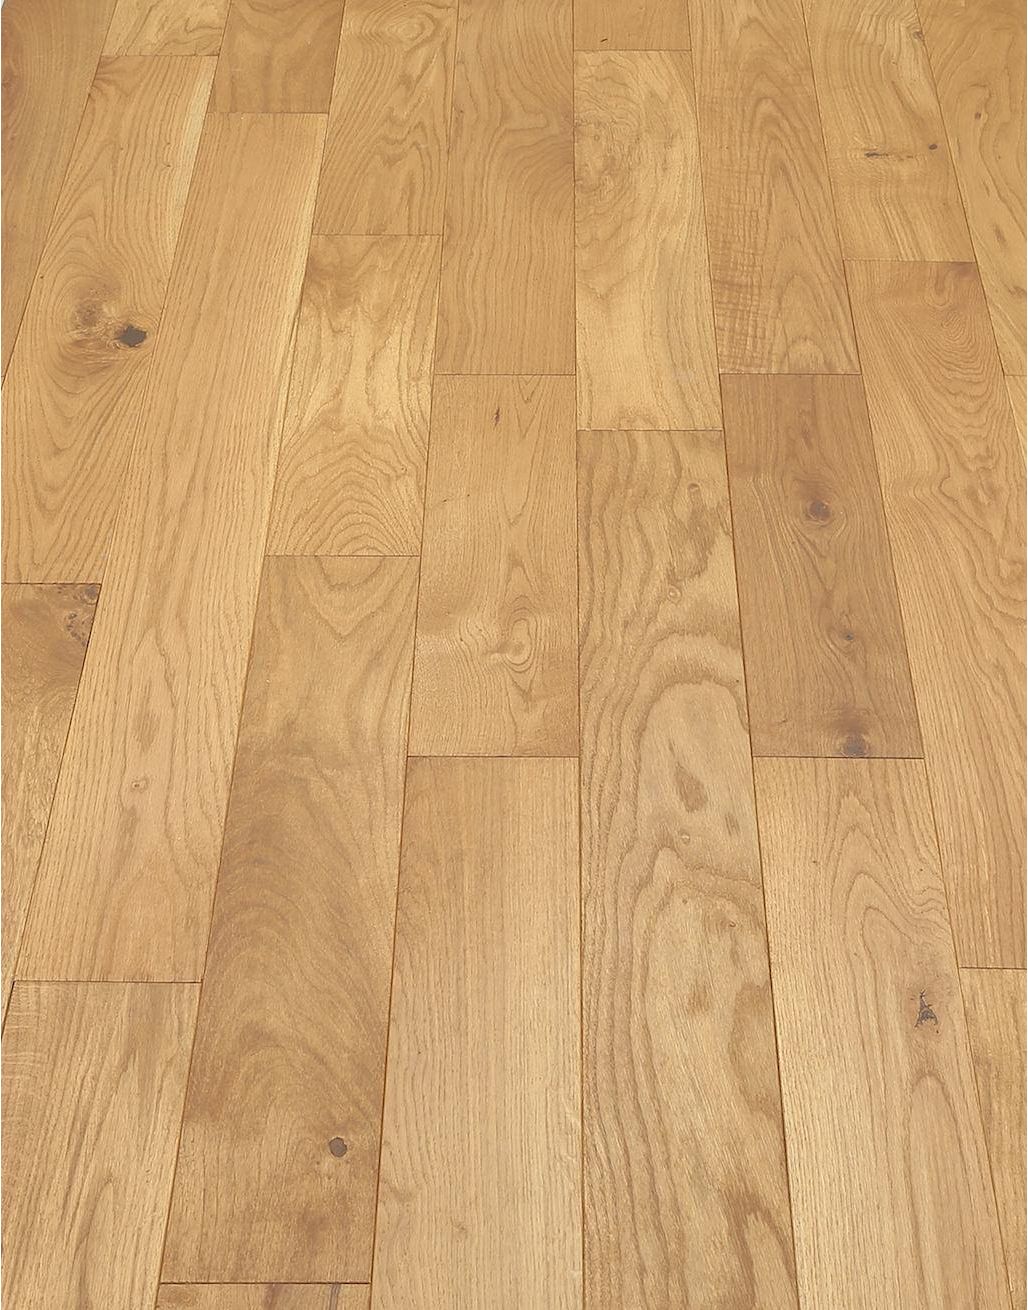 Park Avenue Herringbone Natural Oak Solid Wood Flooring Direct Wood Flooring